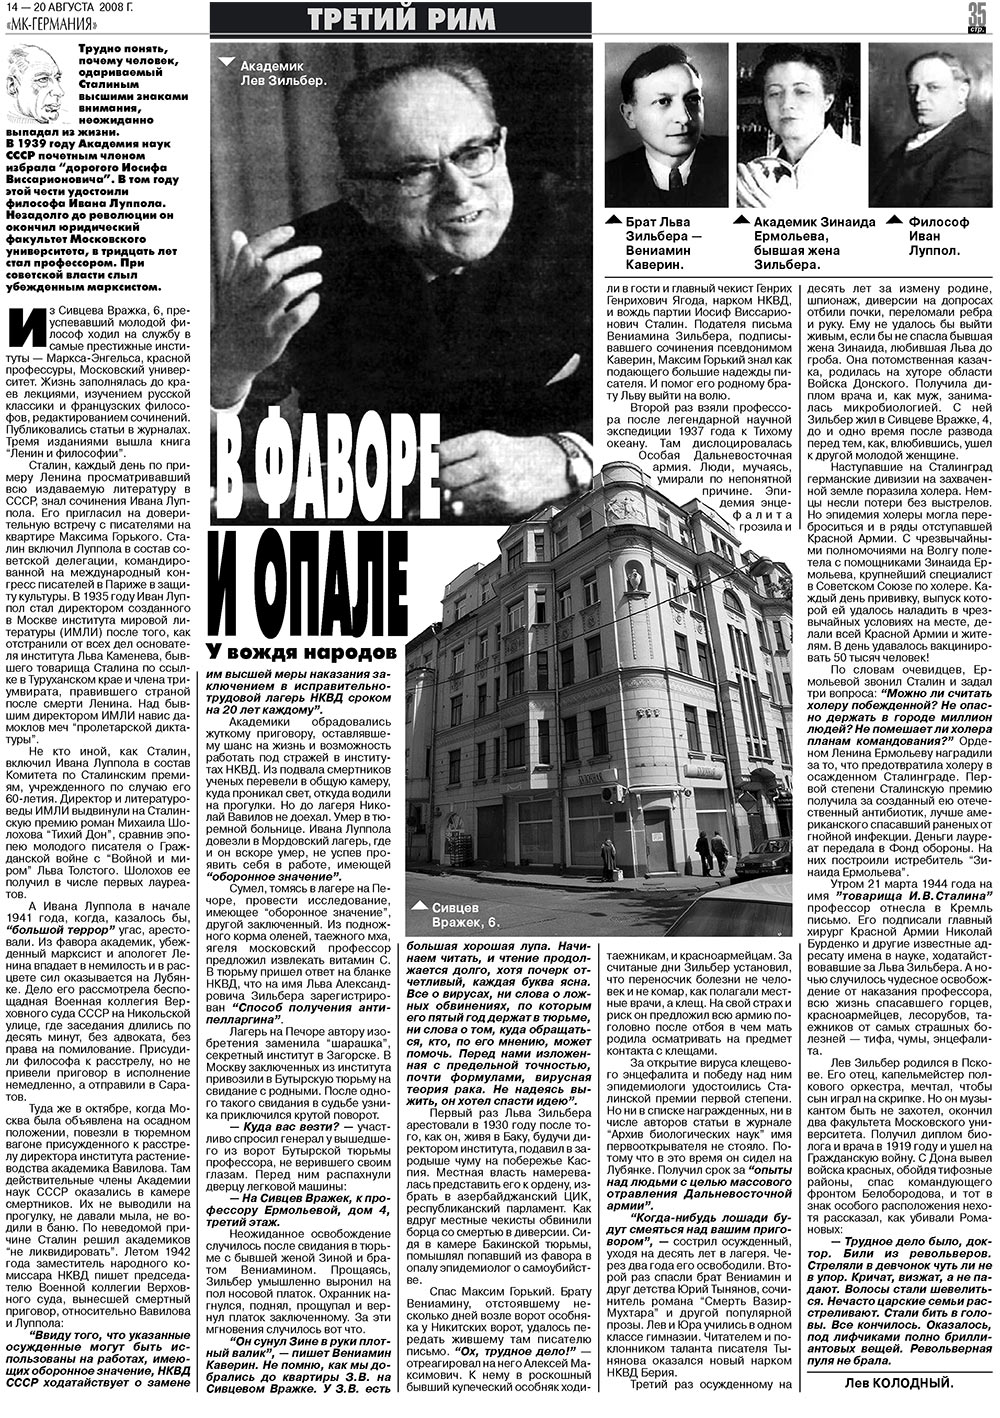 МК-Германия, газета. 2008 №33 стр.35